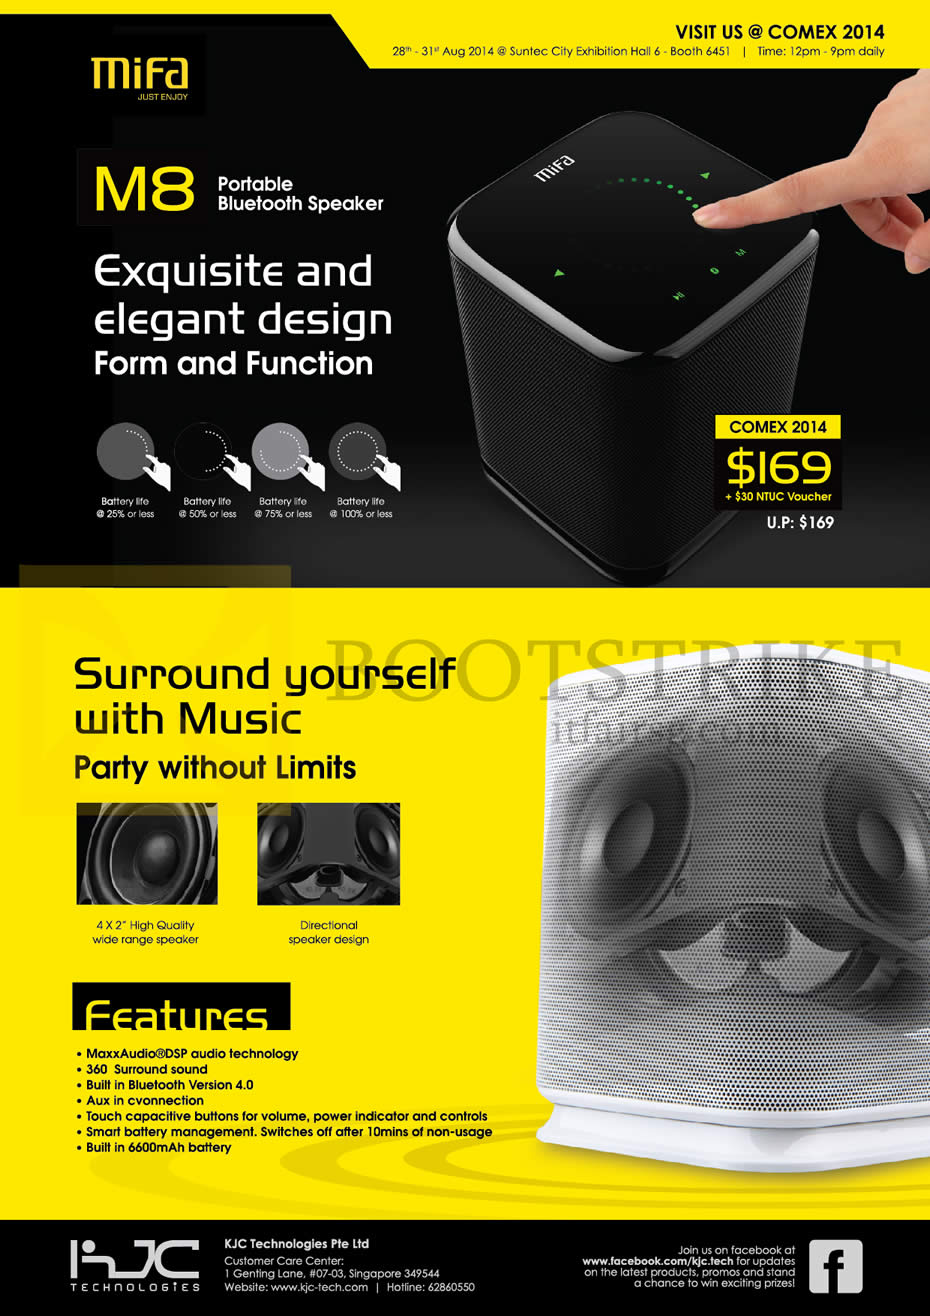 COMEX 2014 price list image brochure of KJC Technologies M8 Portable Bluetooth Speaker